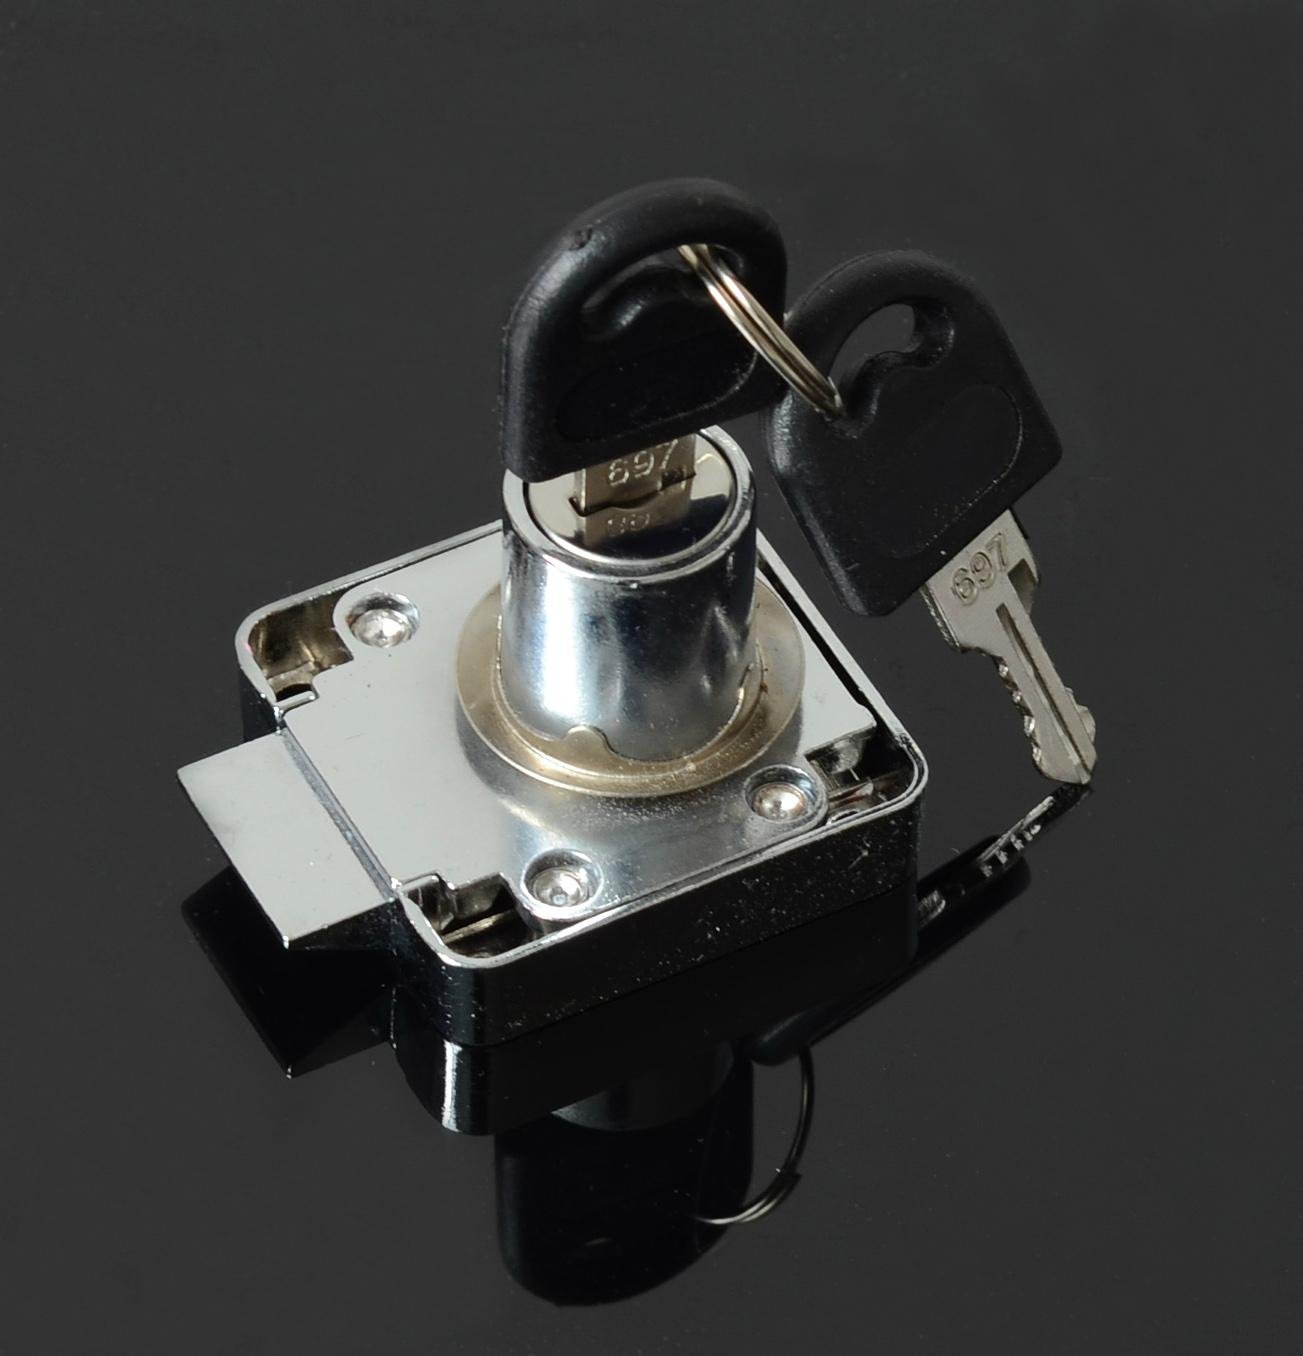 TK-338-22 zinc alloy lock good quality lock. 3